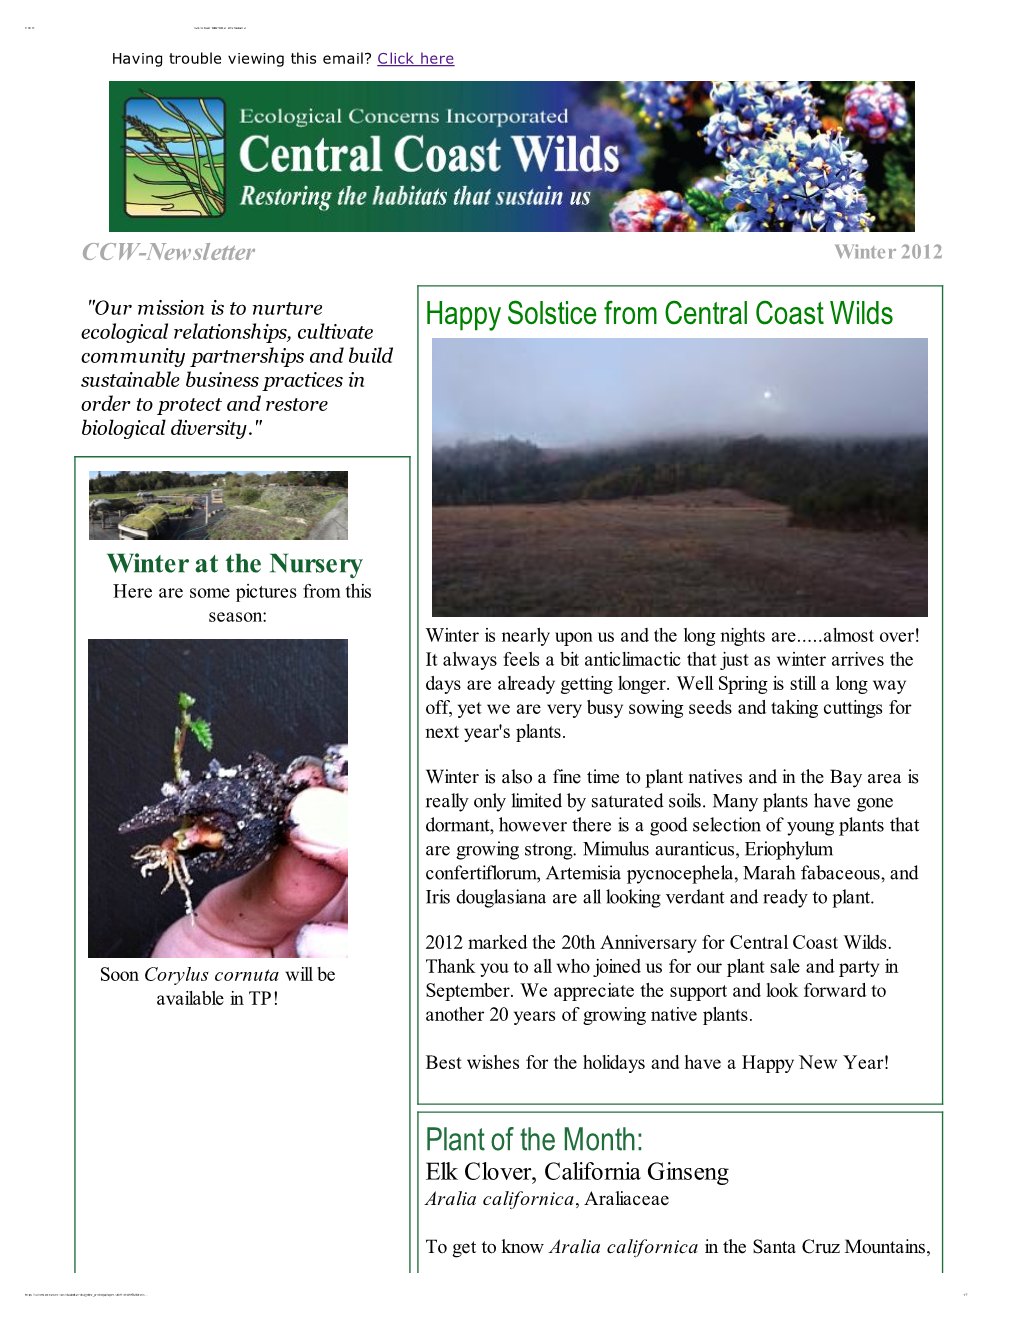 CCW Winter 2012 Newsletter